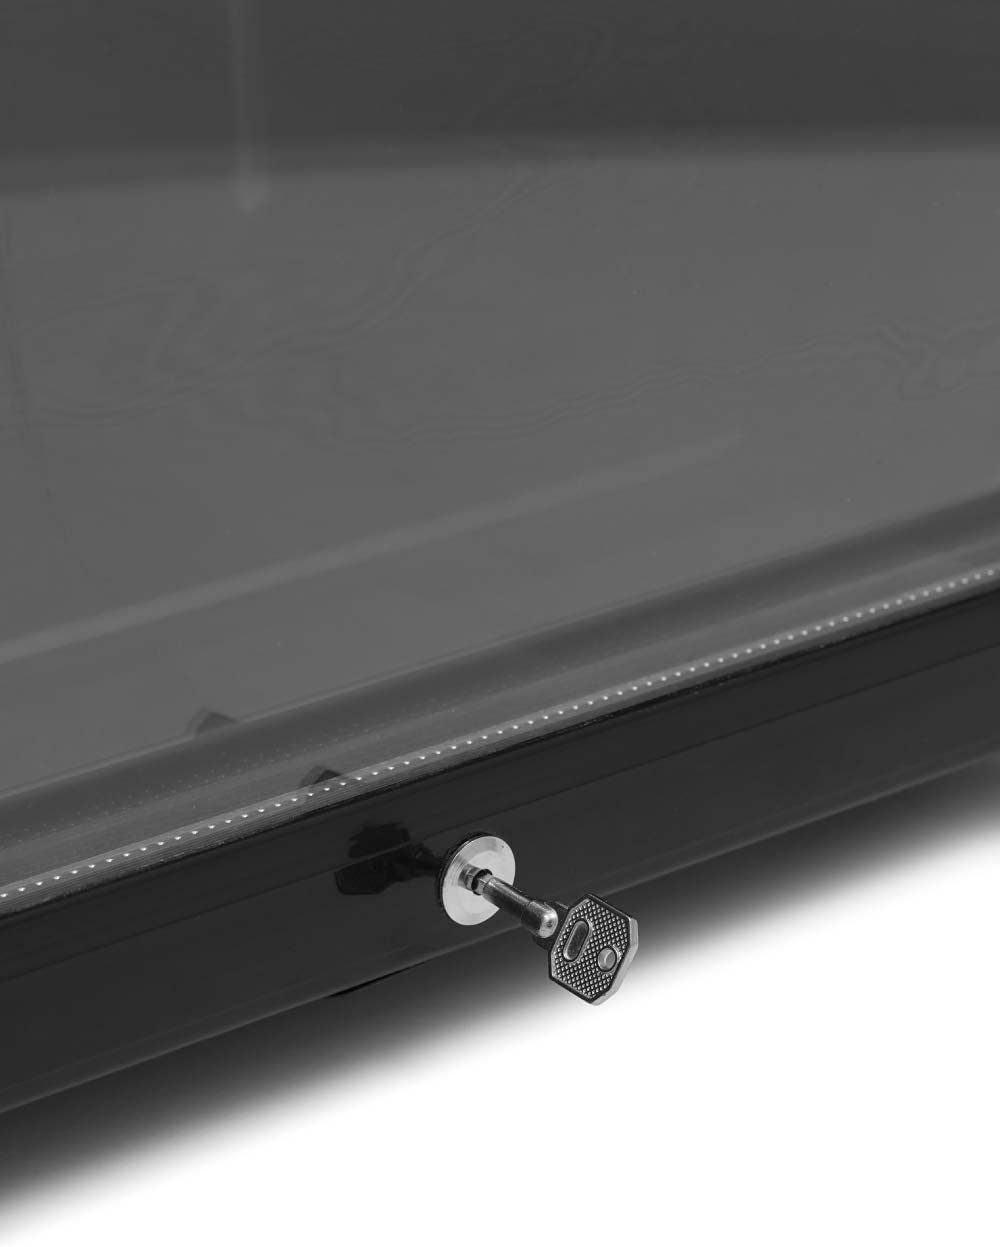 ICEKING DF48K Tabletop Mini Drinks Fridge, 49 Litre Capacity, 48cm Wide, Reversible Door, Low Noise Level, Lockable – Black